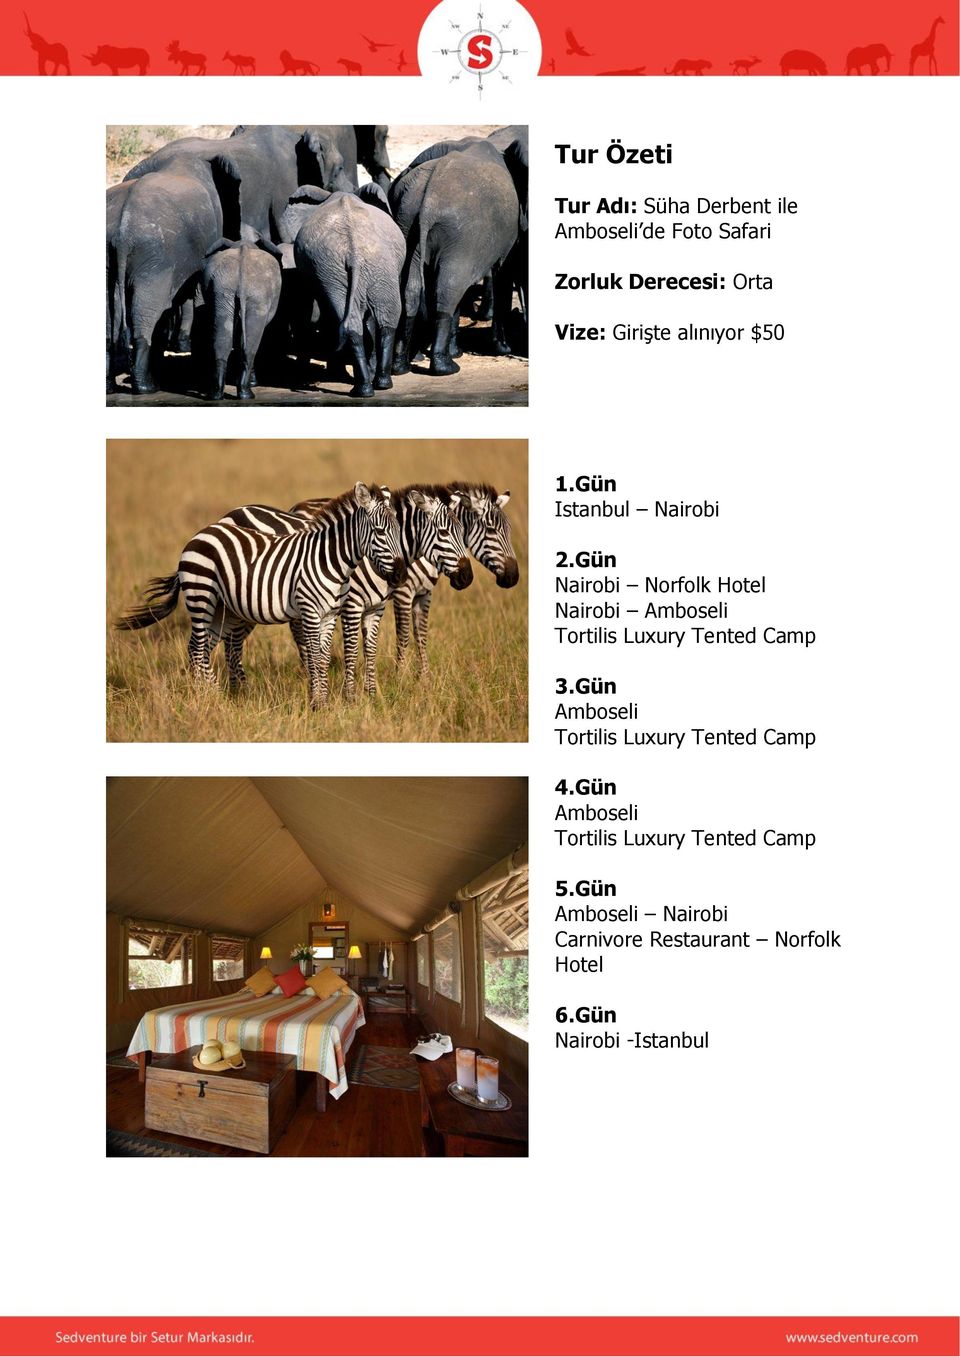 Gün Nairobi Norfolk Hotel Nairobi Amboseli Tortilis Luxury Tented Camp 3.